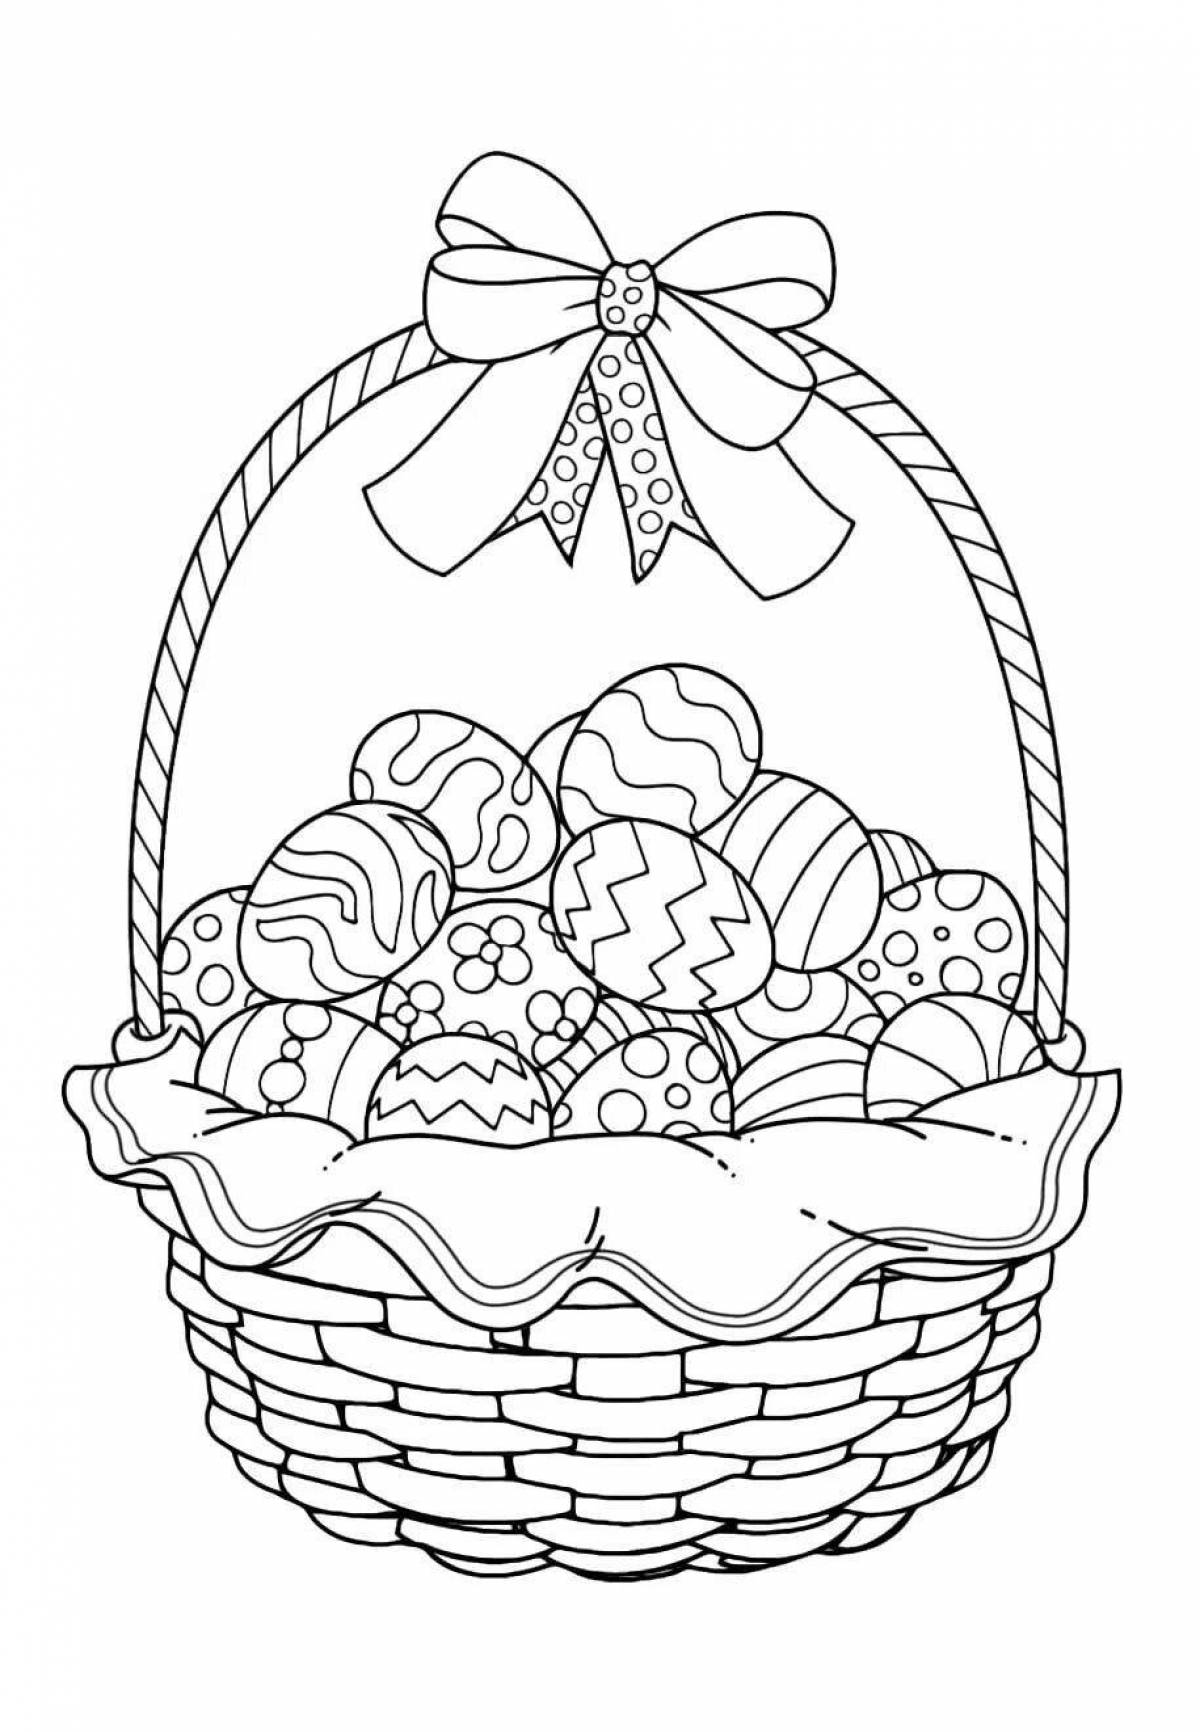 Playful basket coloring page